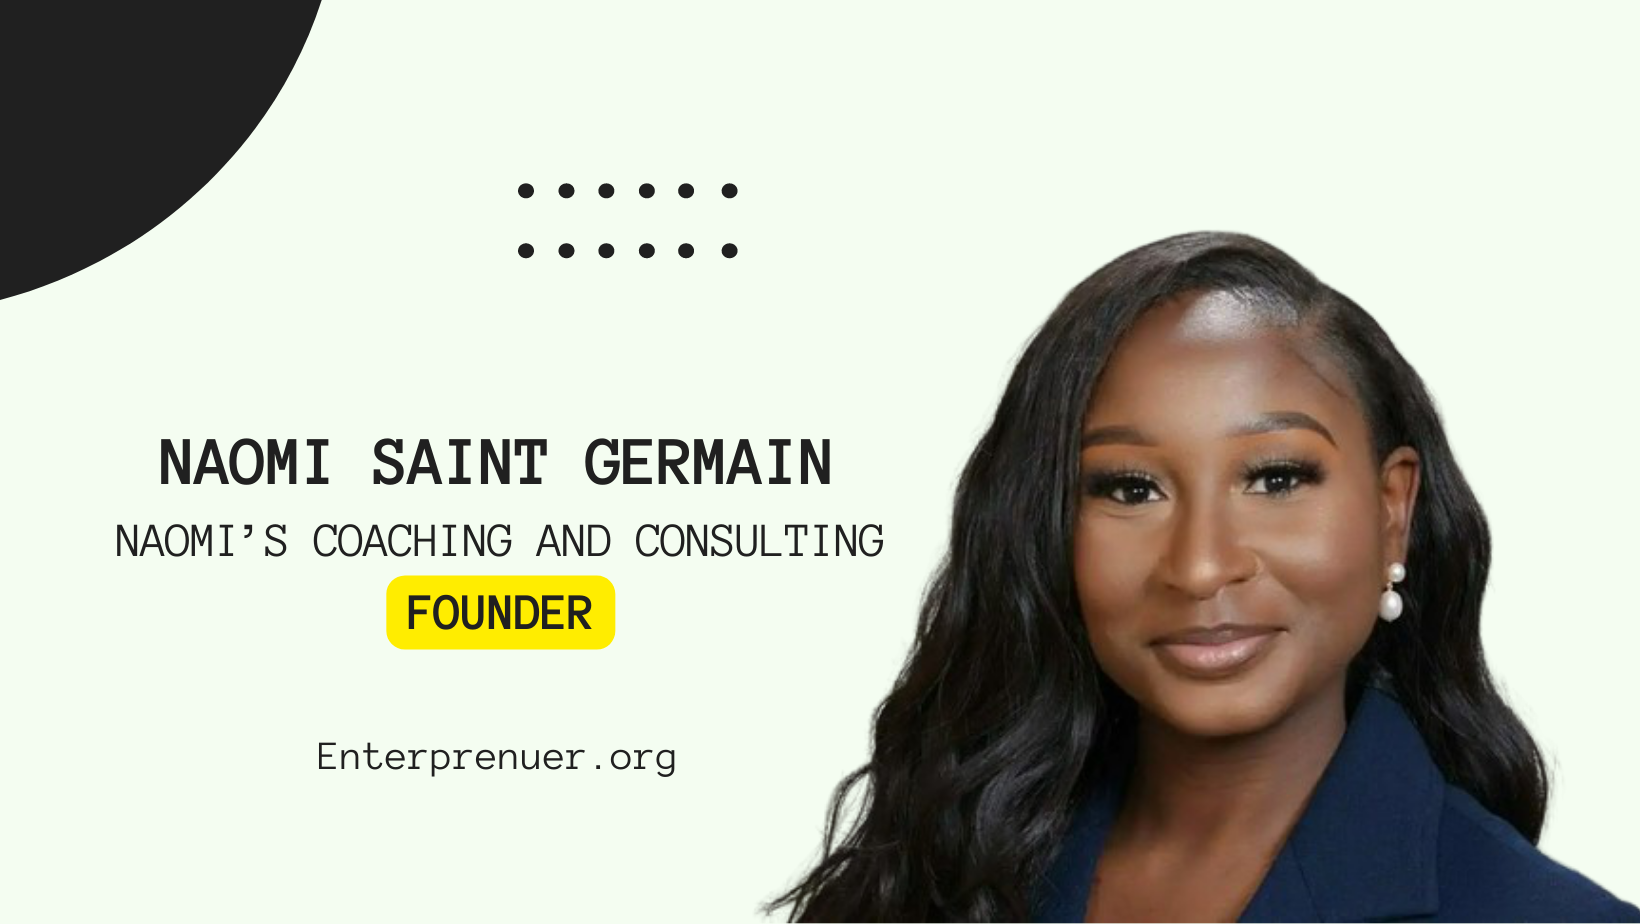 Naomi Saint Germain Founder of Naomi’s Coaching and Consulting